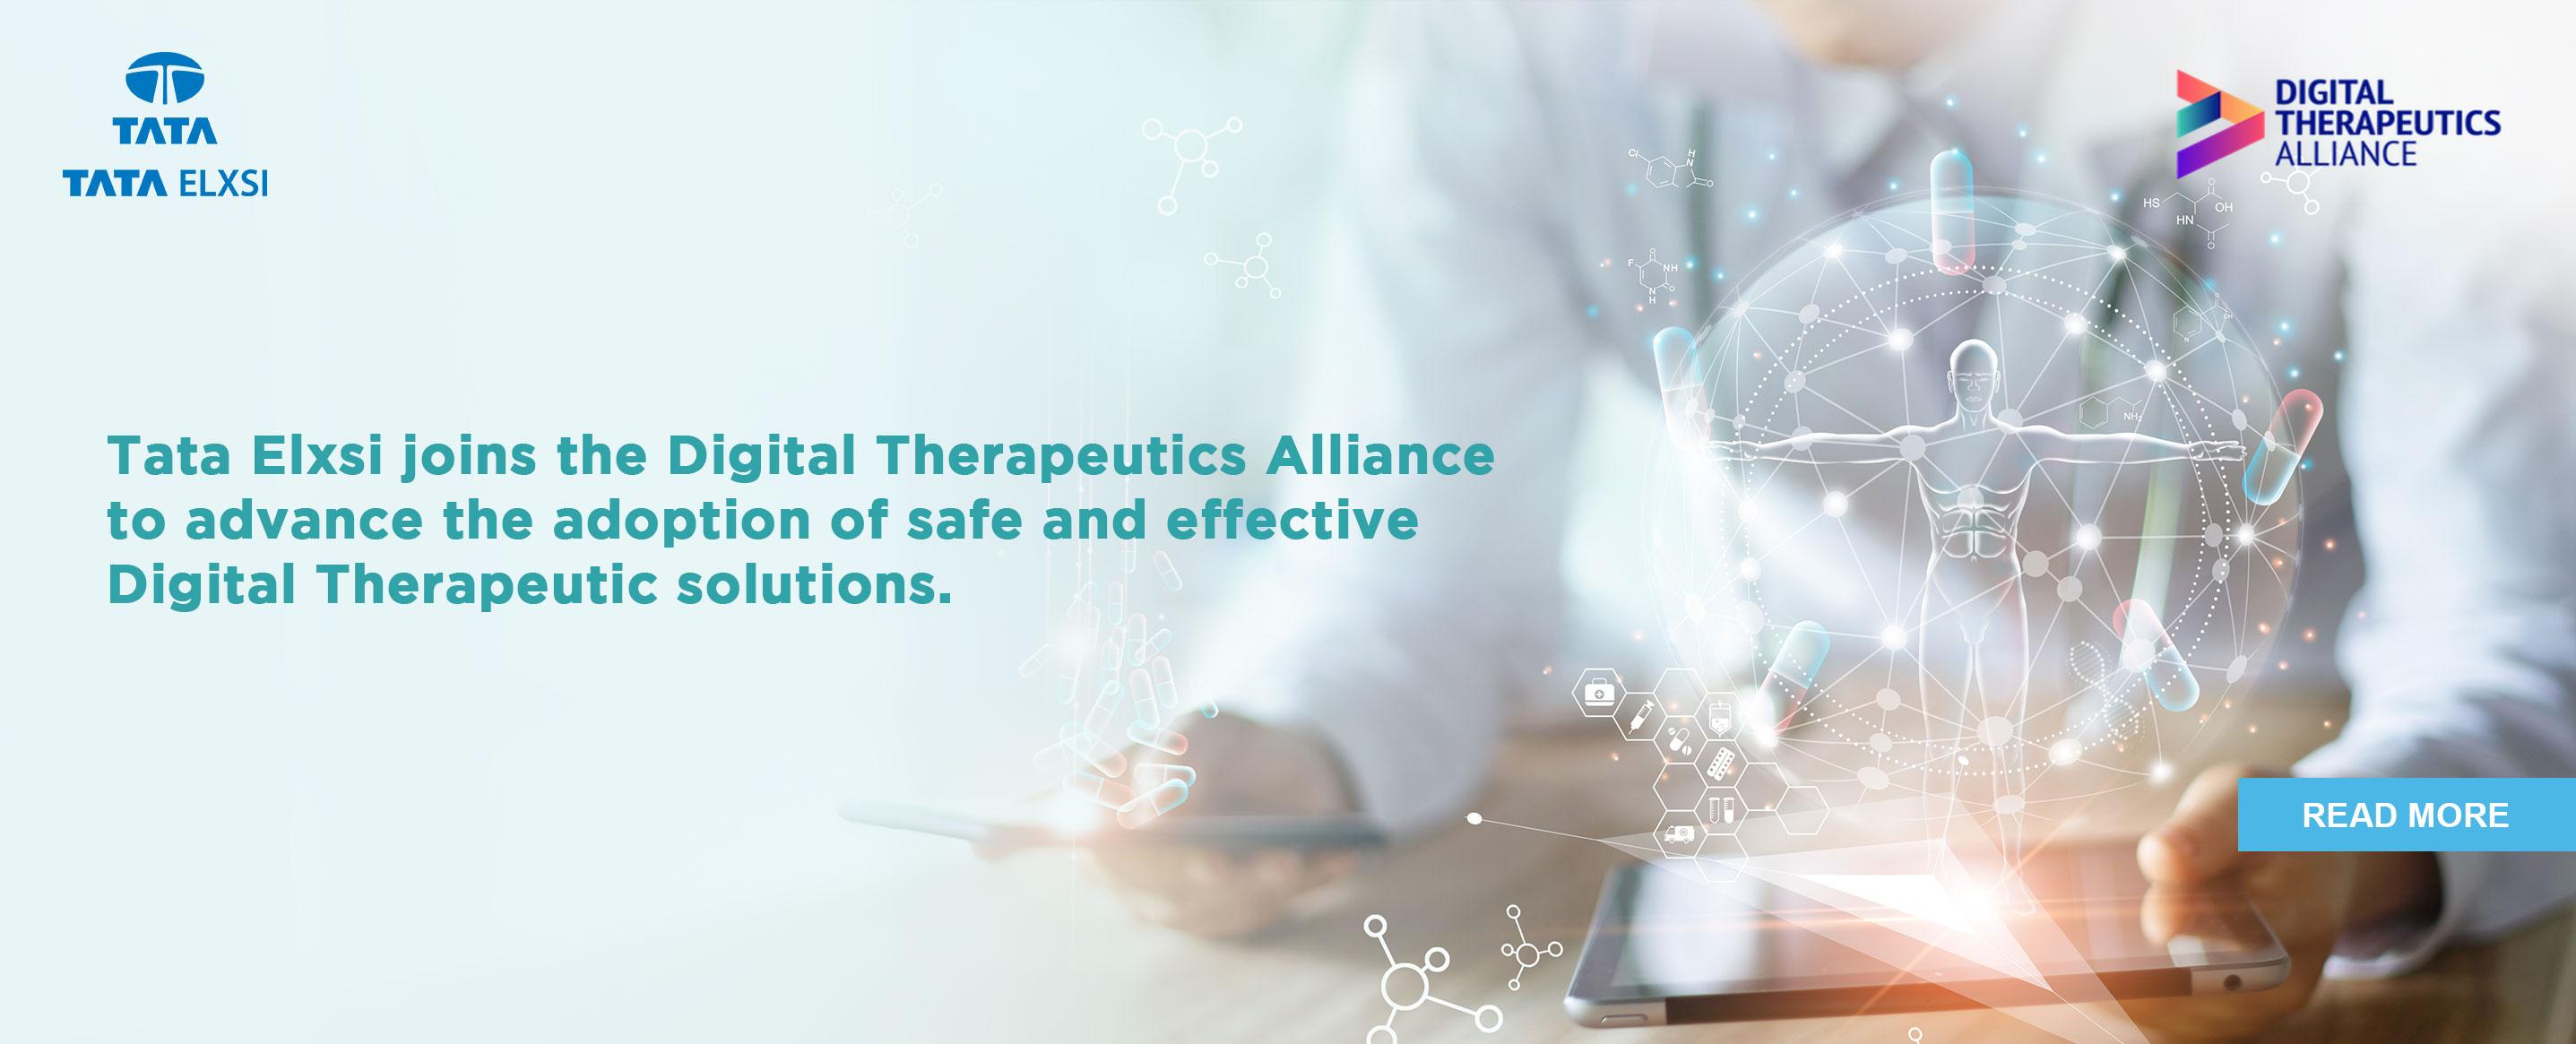 Tata Elxsi joins the Digital Therapeutics Alliance